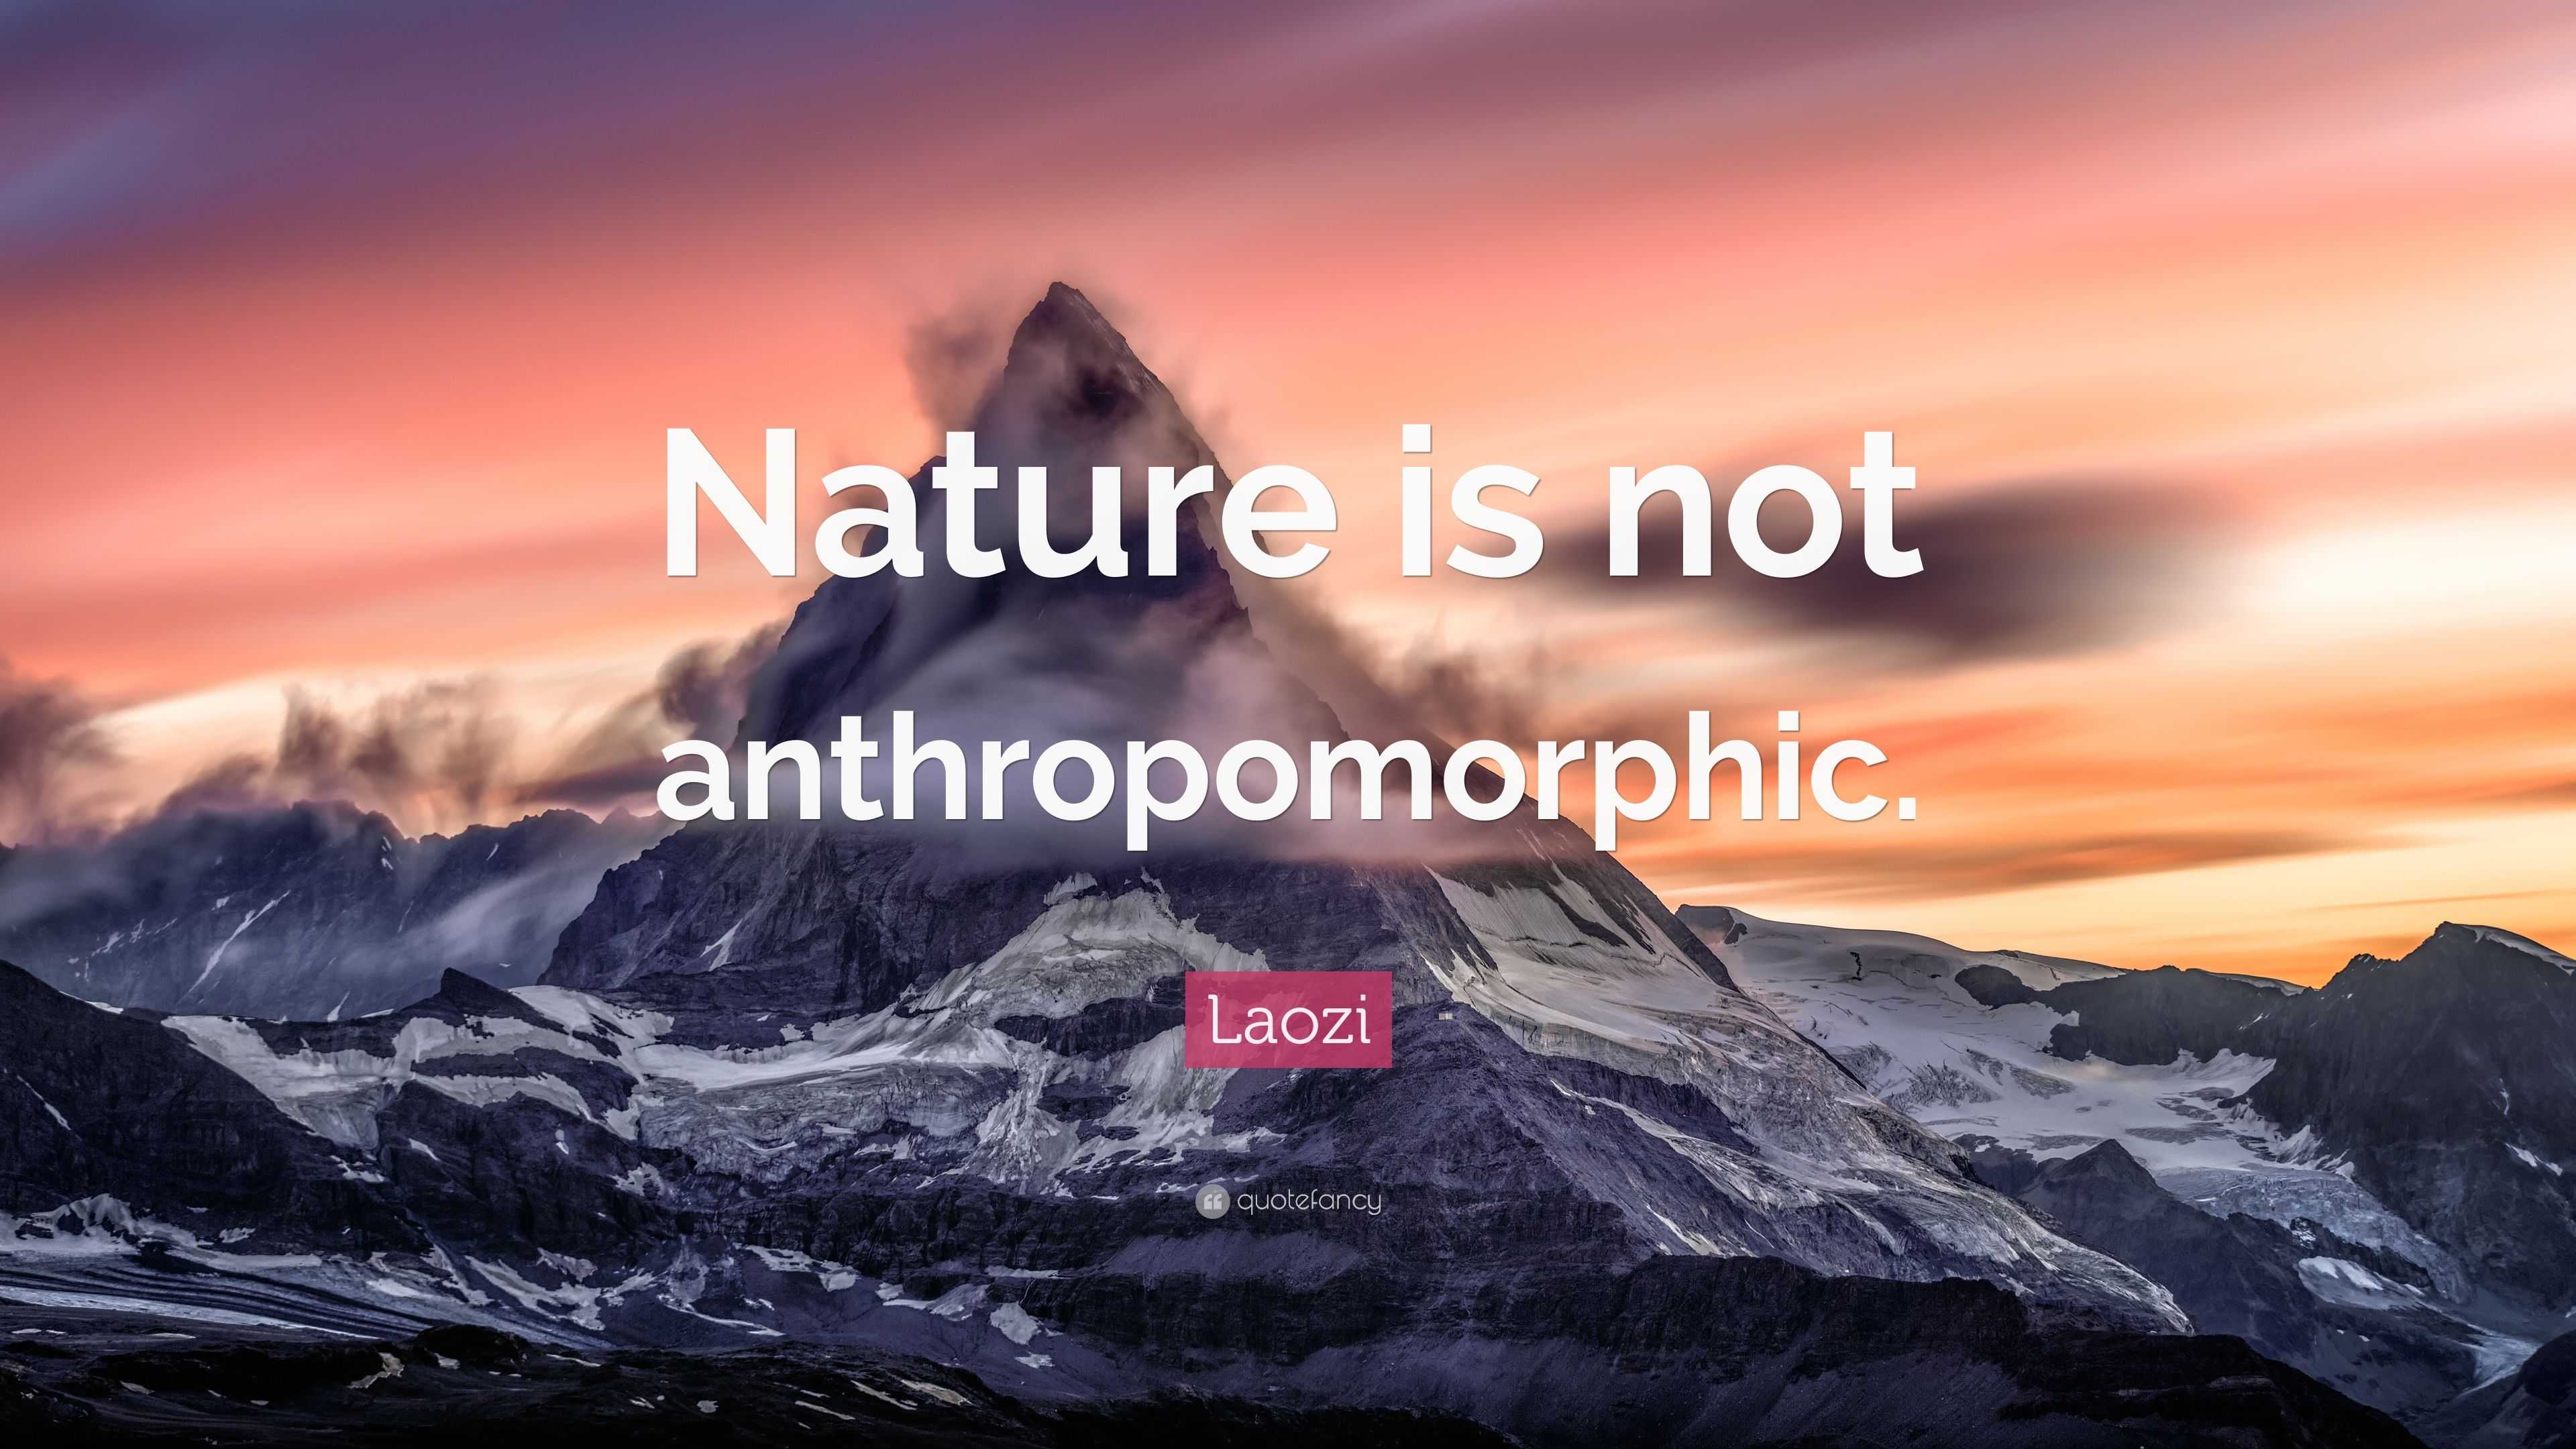 Laozi Quote: is not anthropomorphic.”